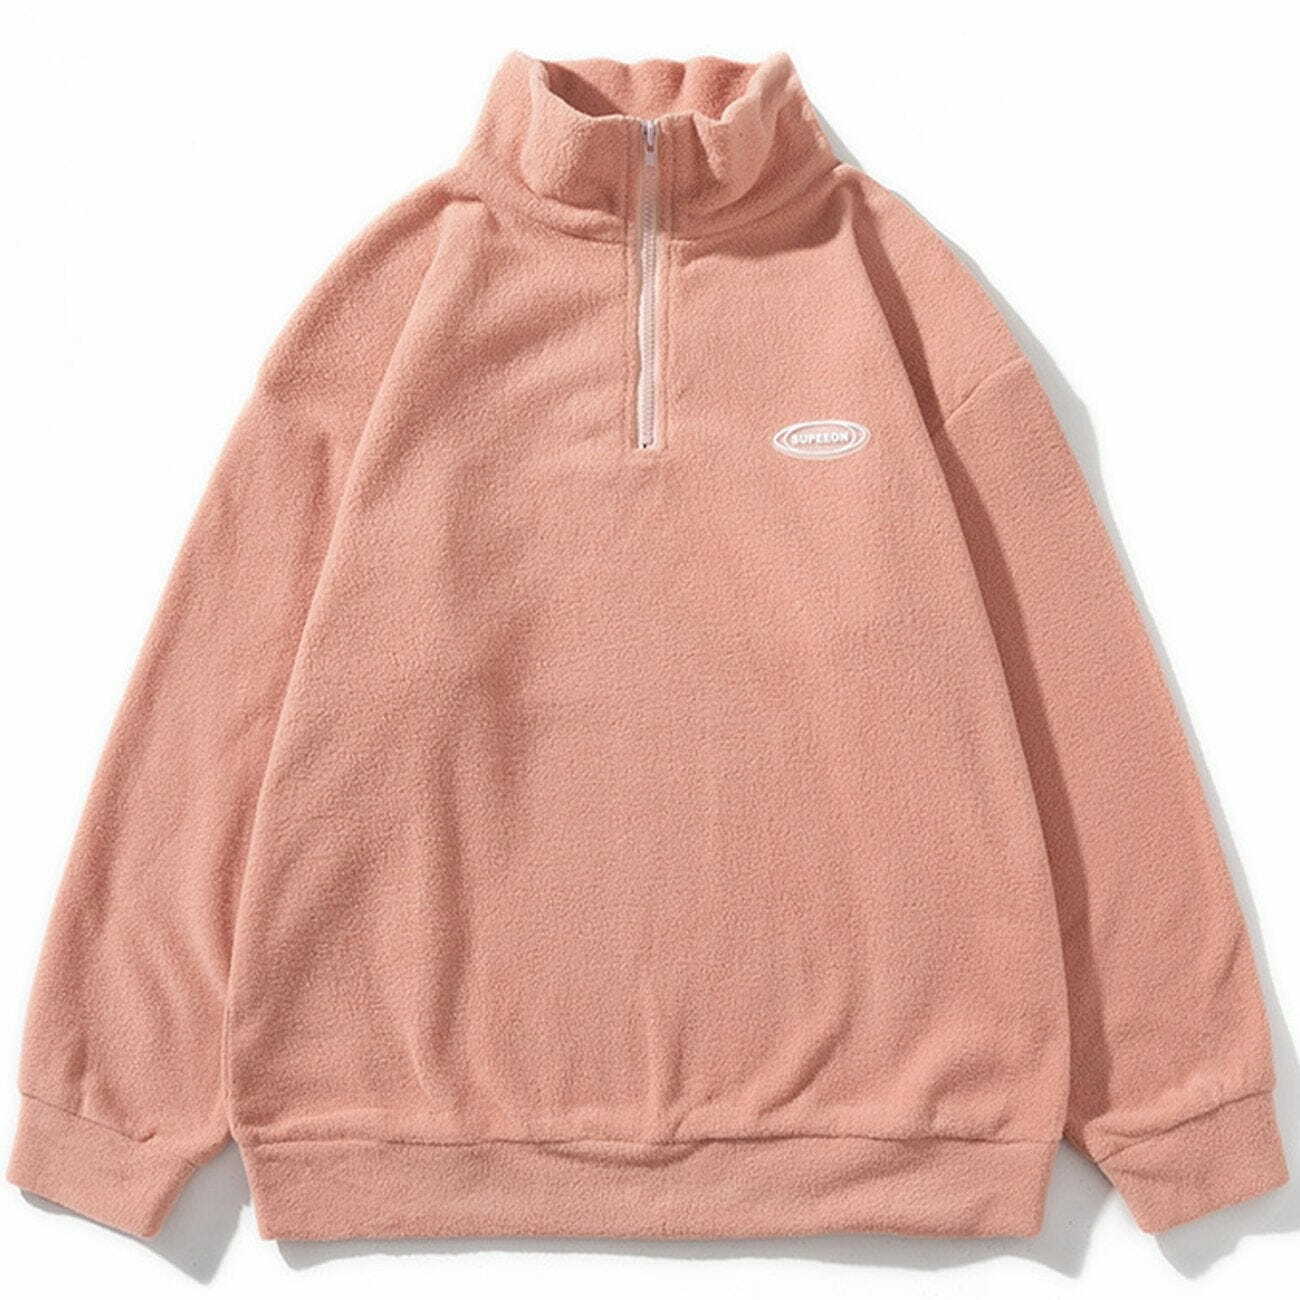 sleek lettered sweatshirt urban fashion essential 6270